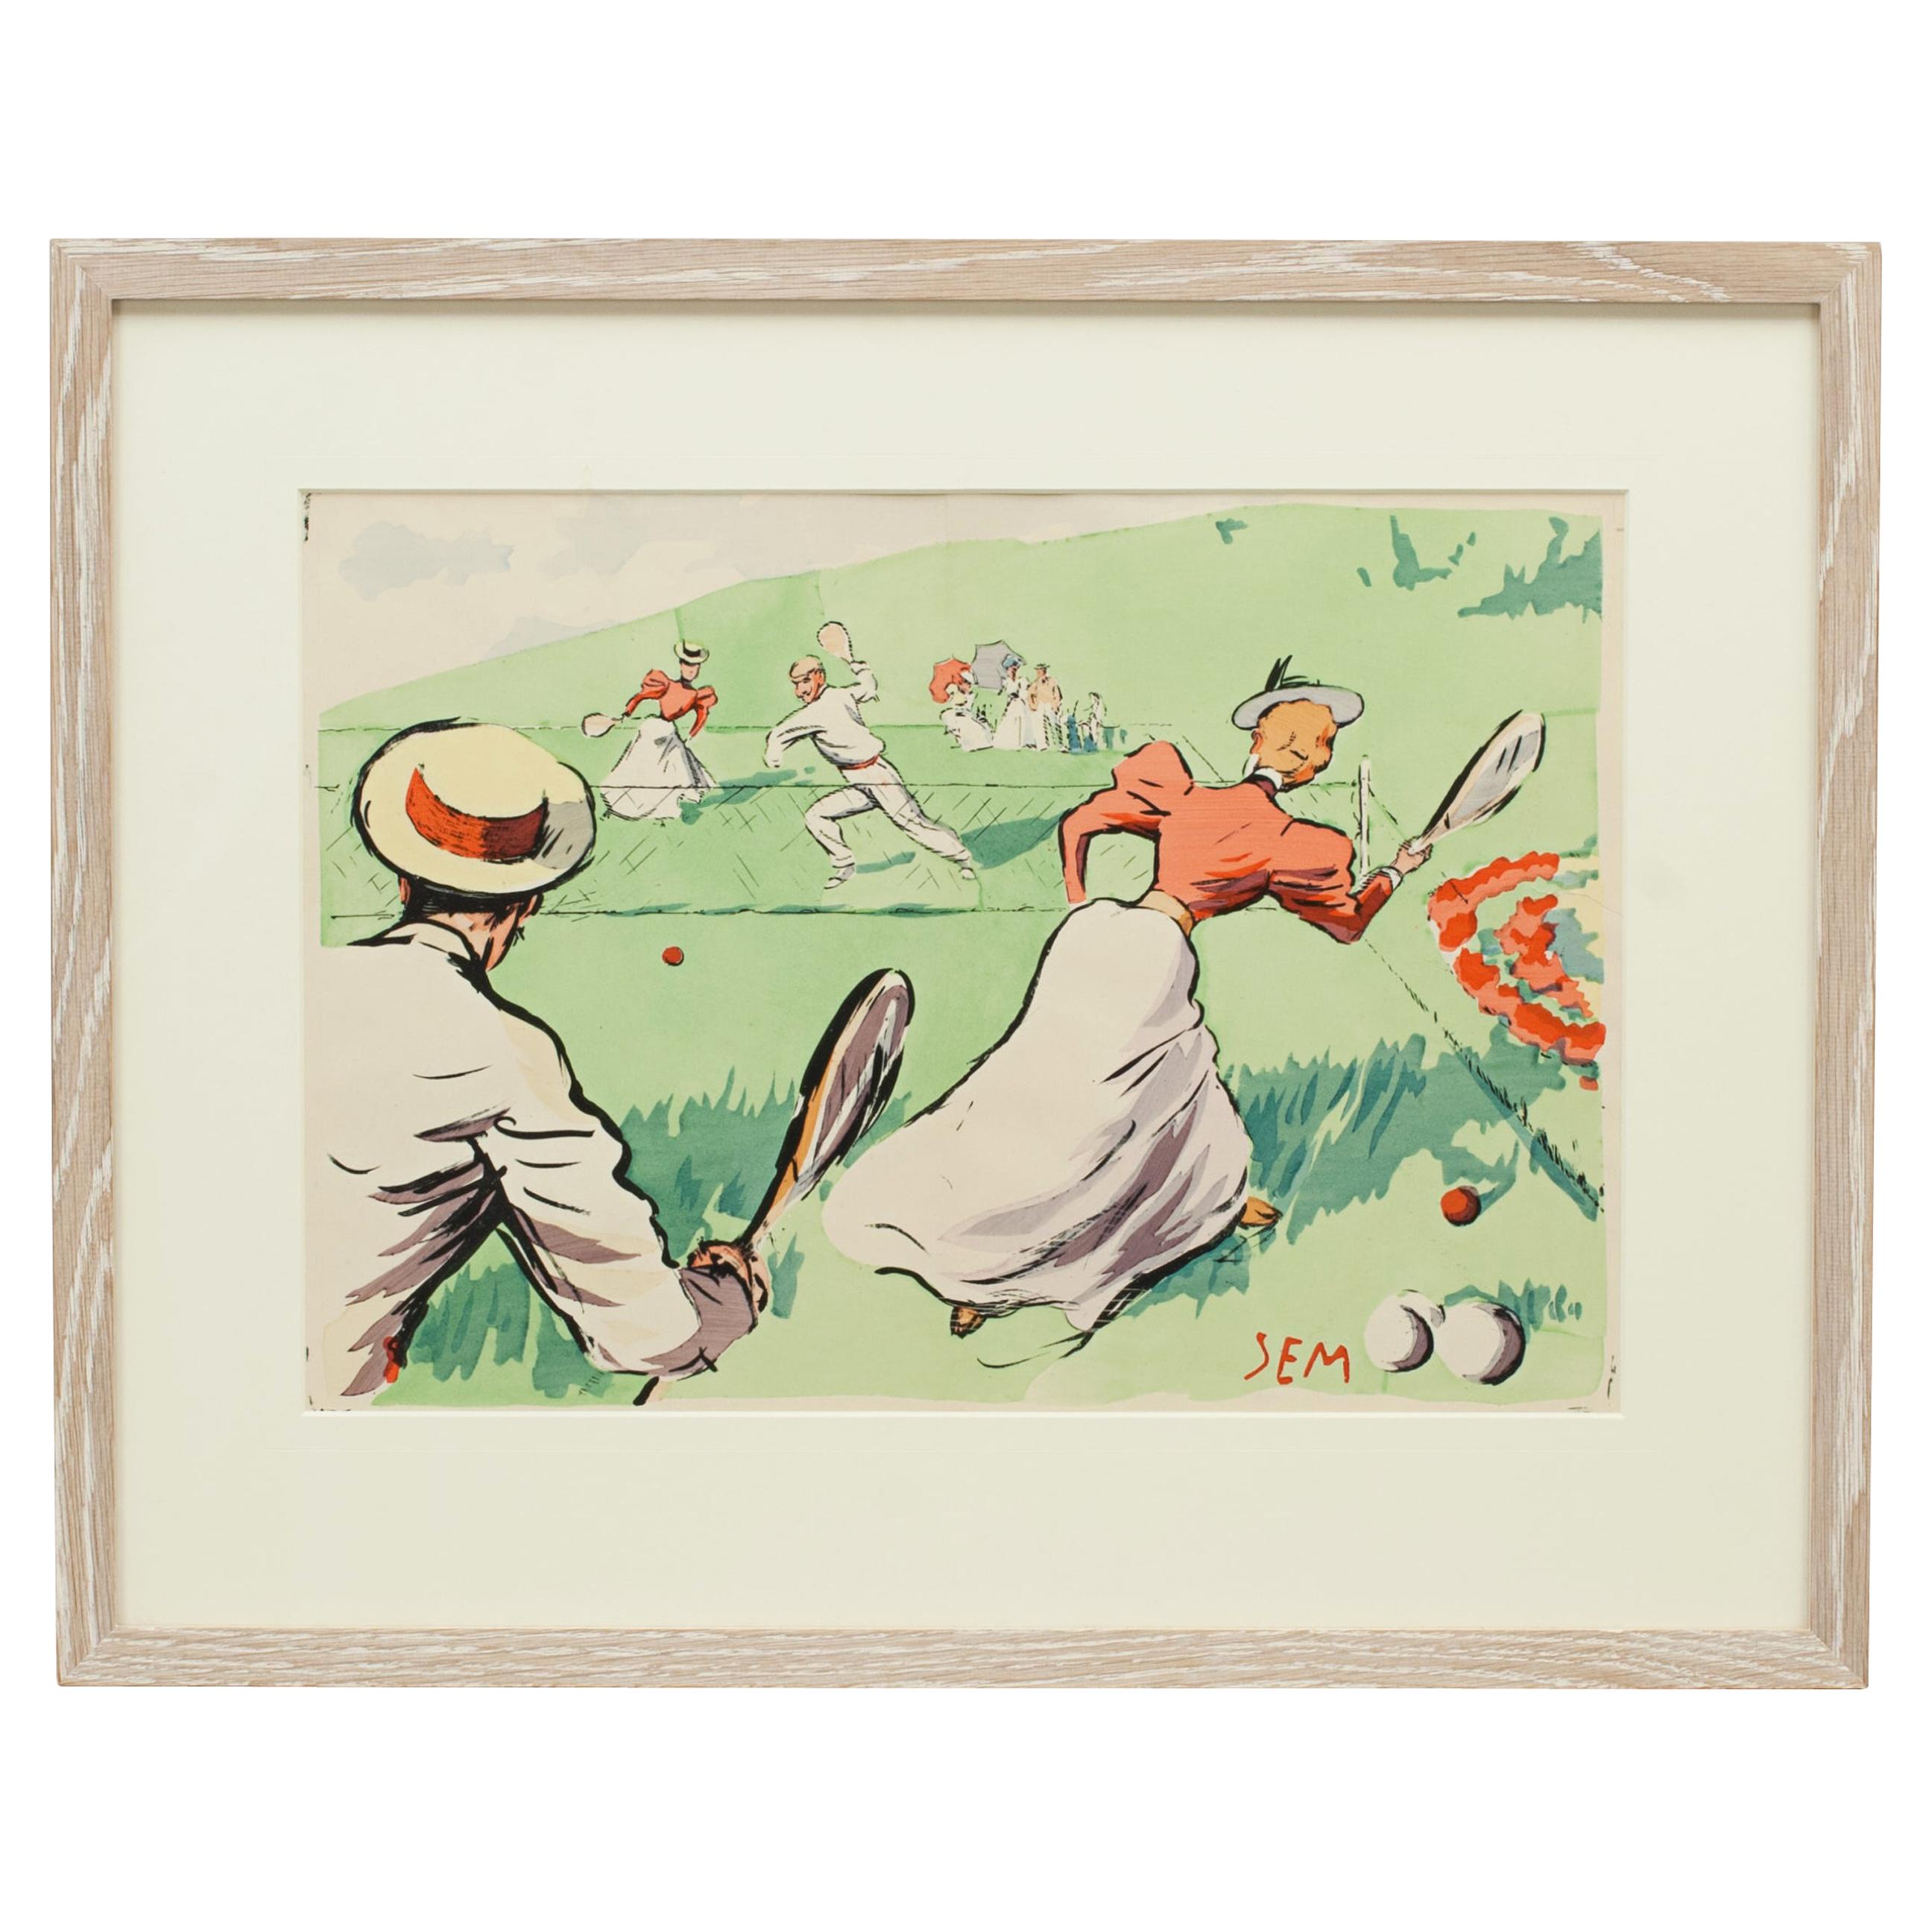 Vintage Tennis, Georges Goursat (SEM) Lawn Tennis Print